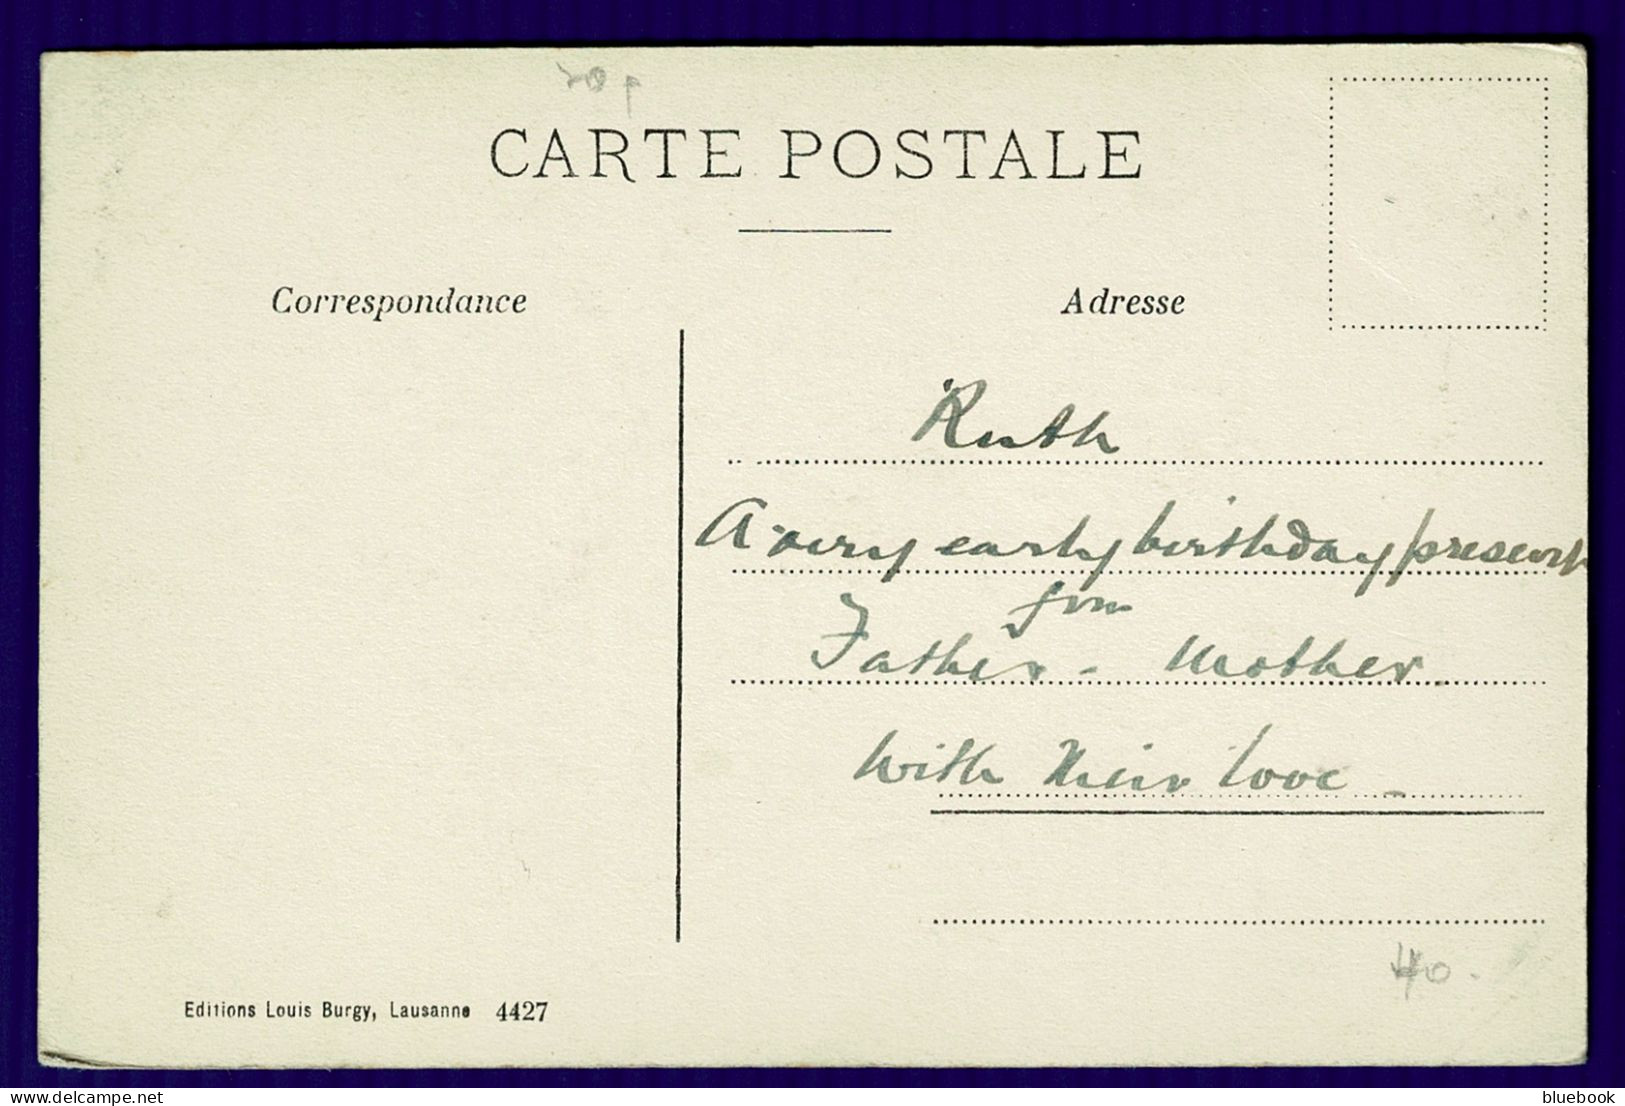 Ref 1645 - Early Postcard - Workers On A Break - Etude En Valais - Switzerland - Autres & Non Classés